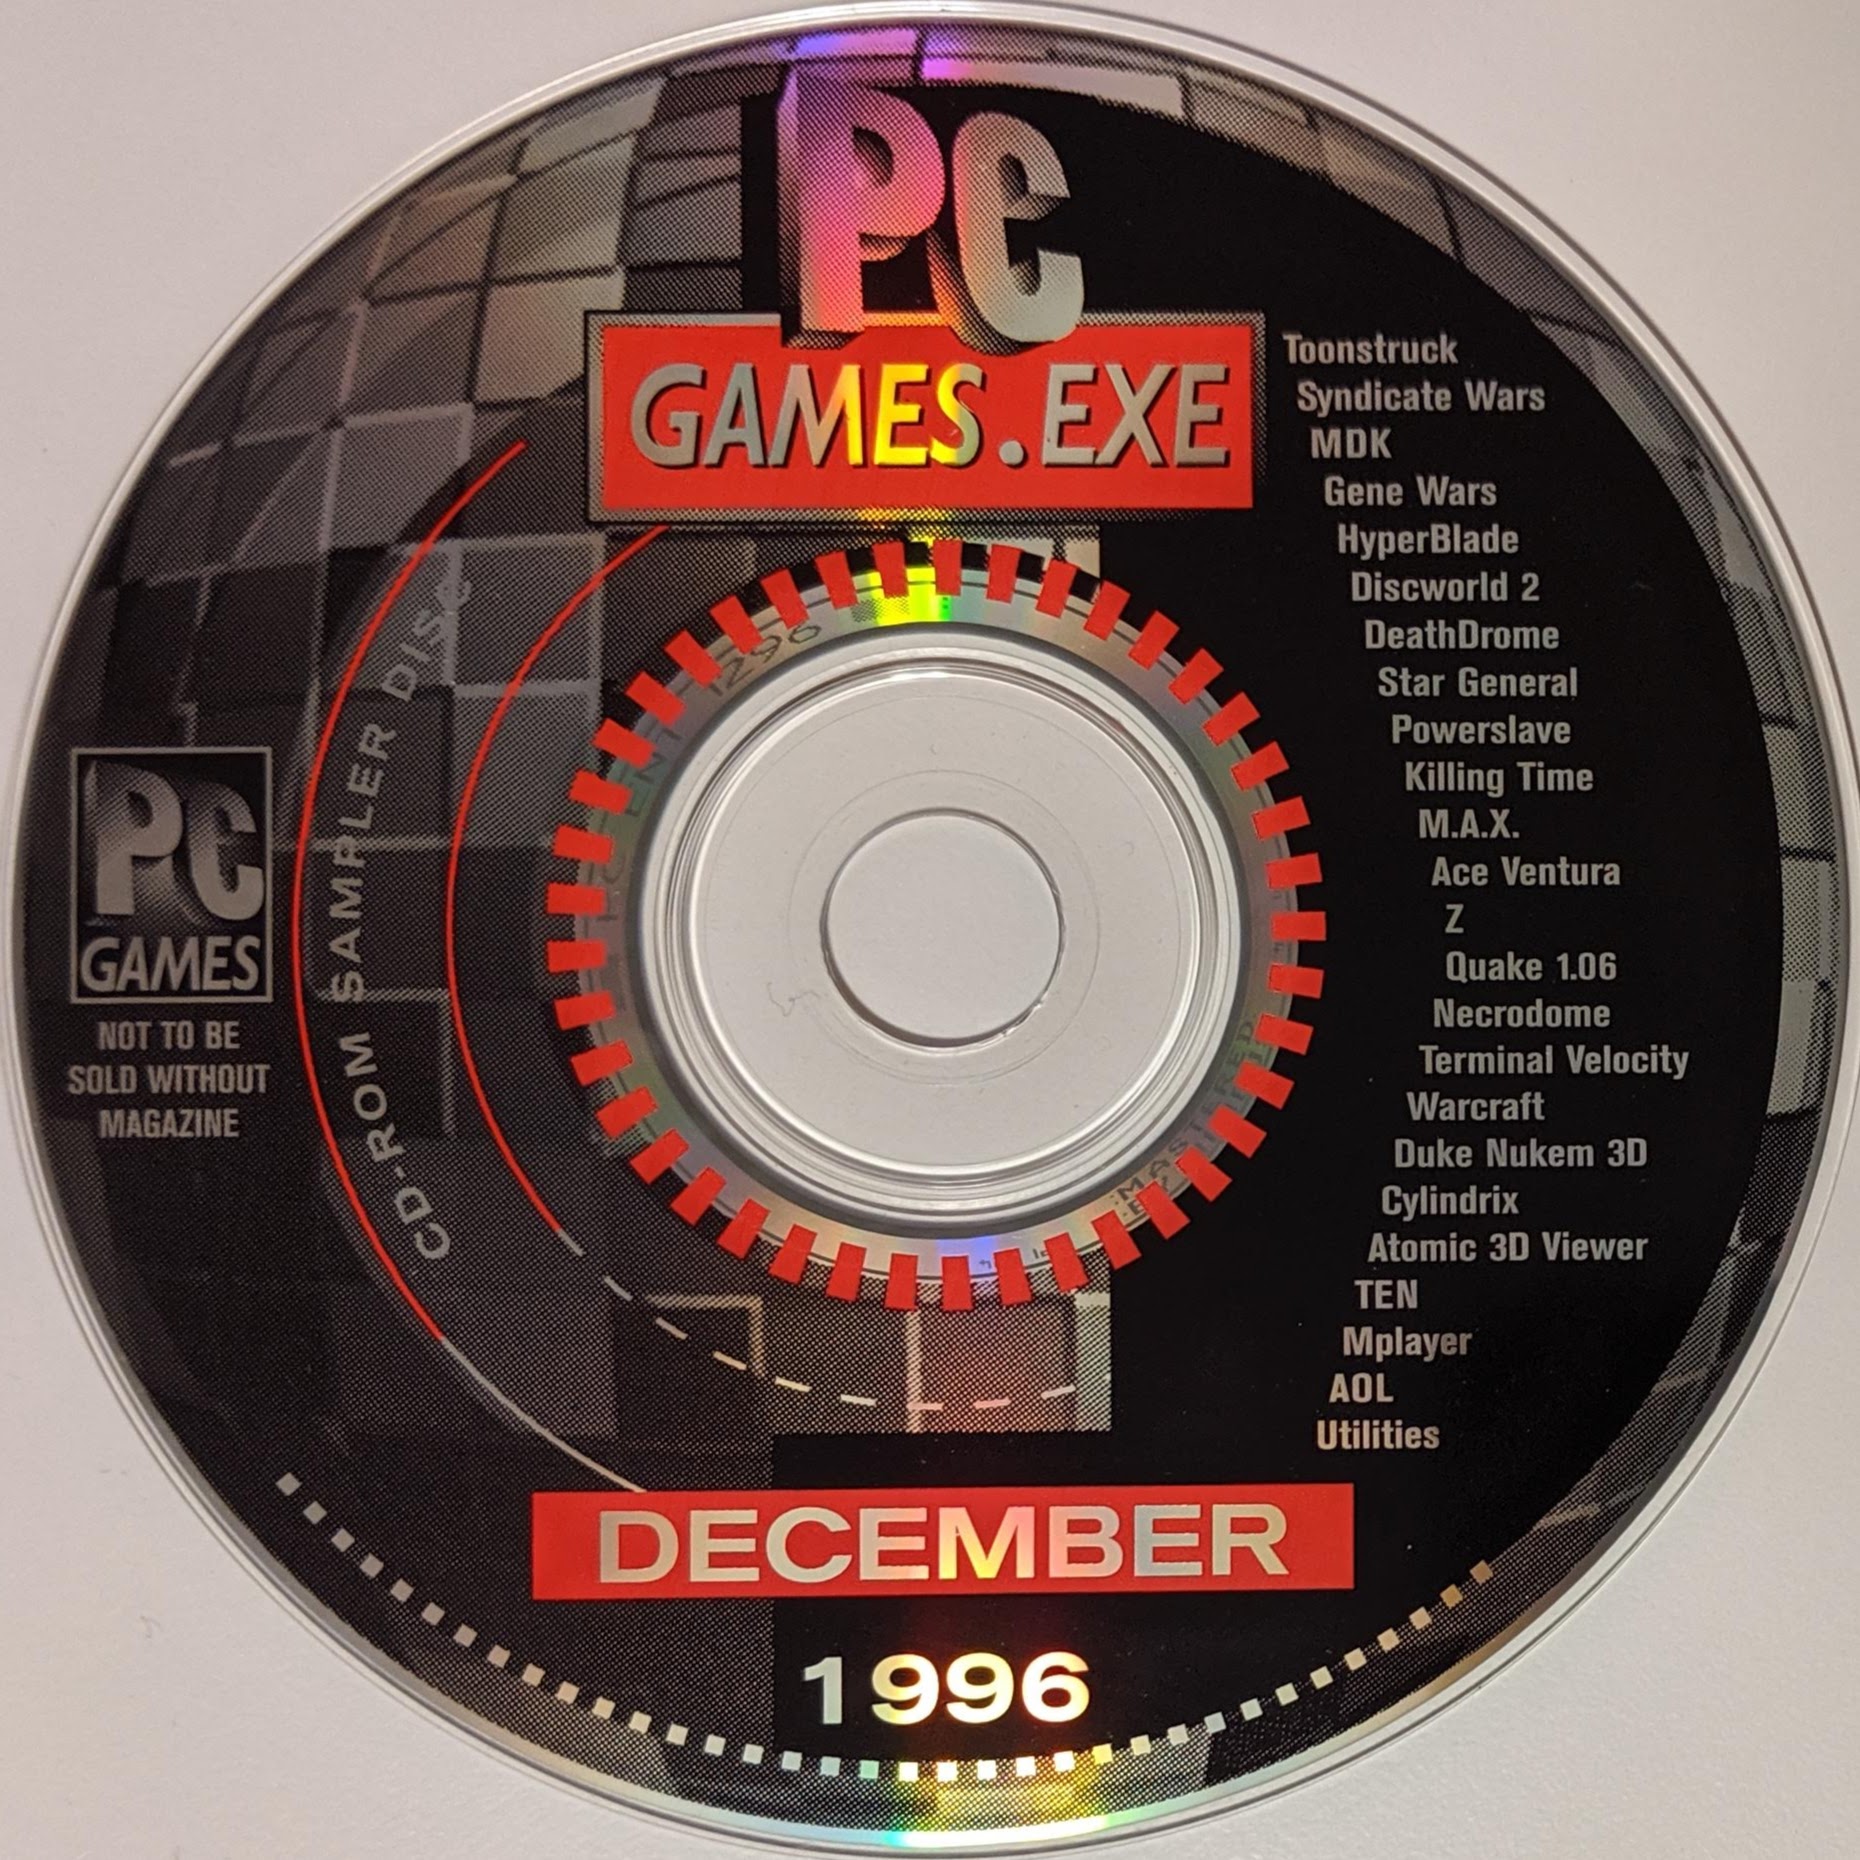 Demo Disc CD-ROM